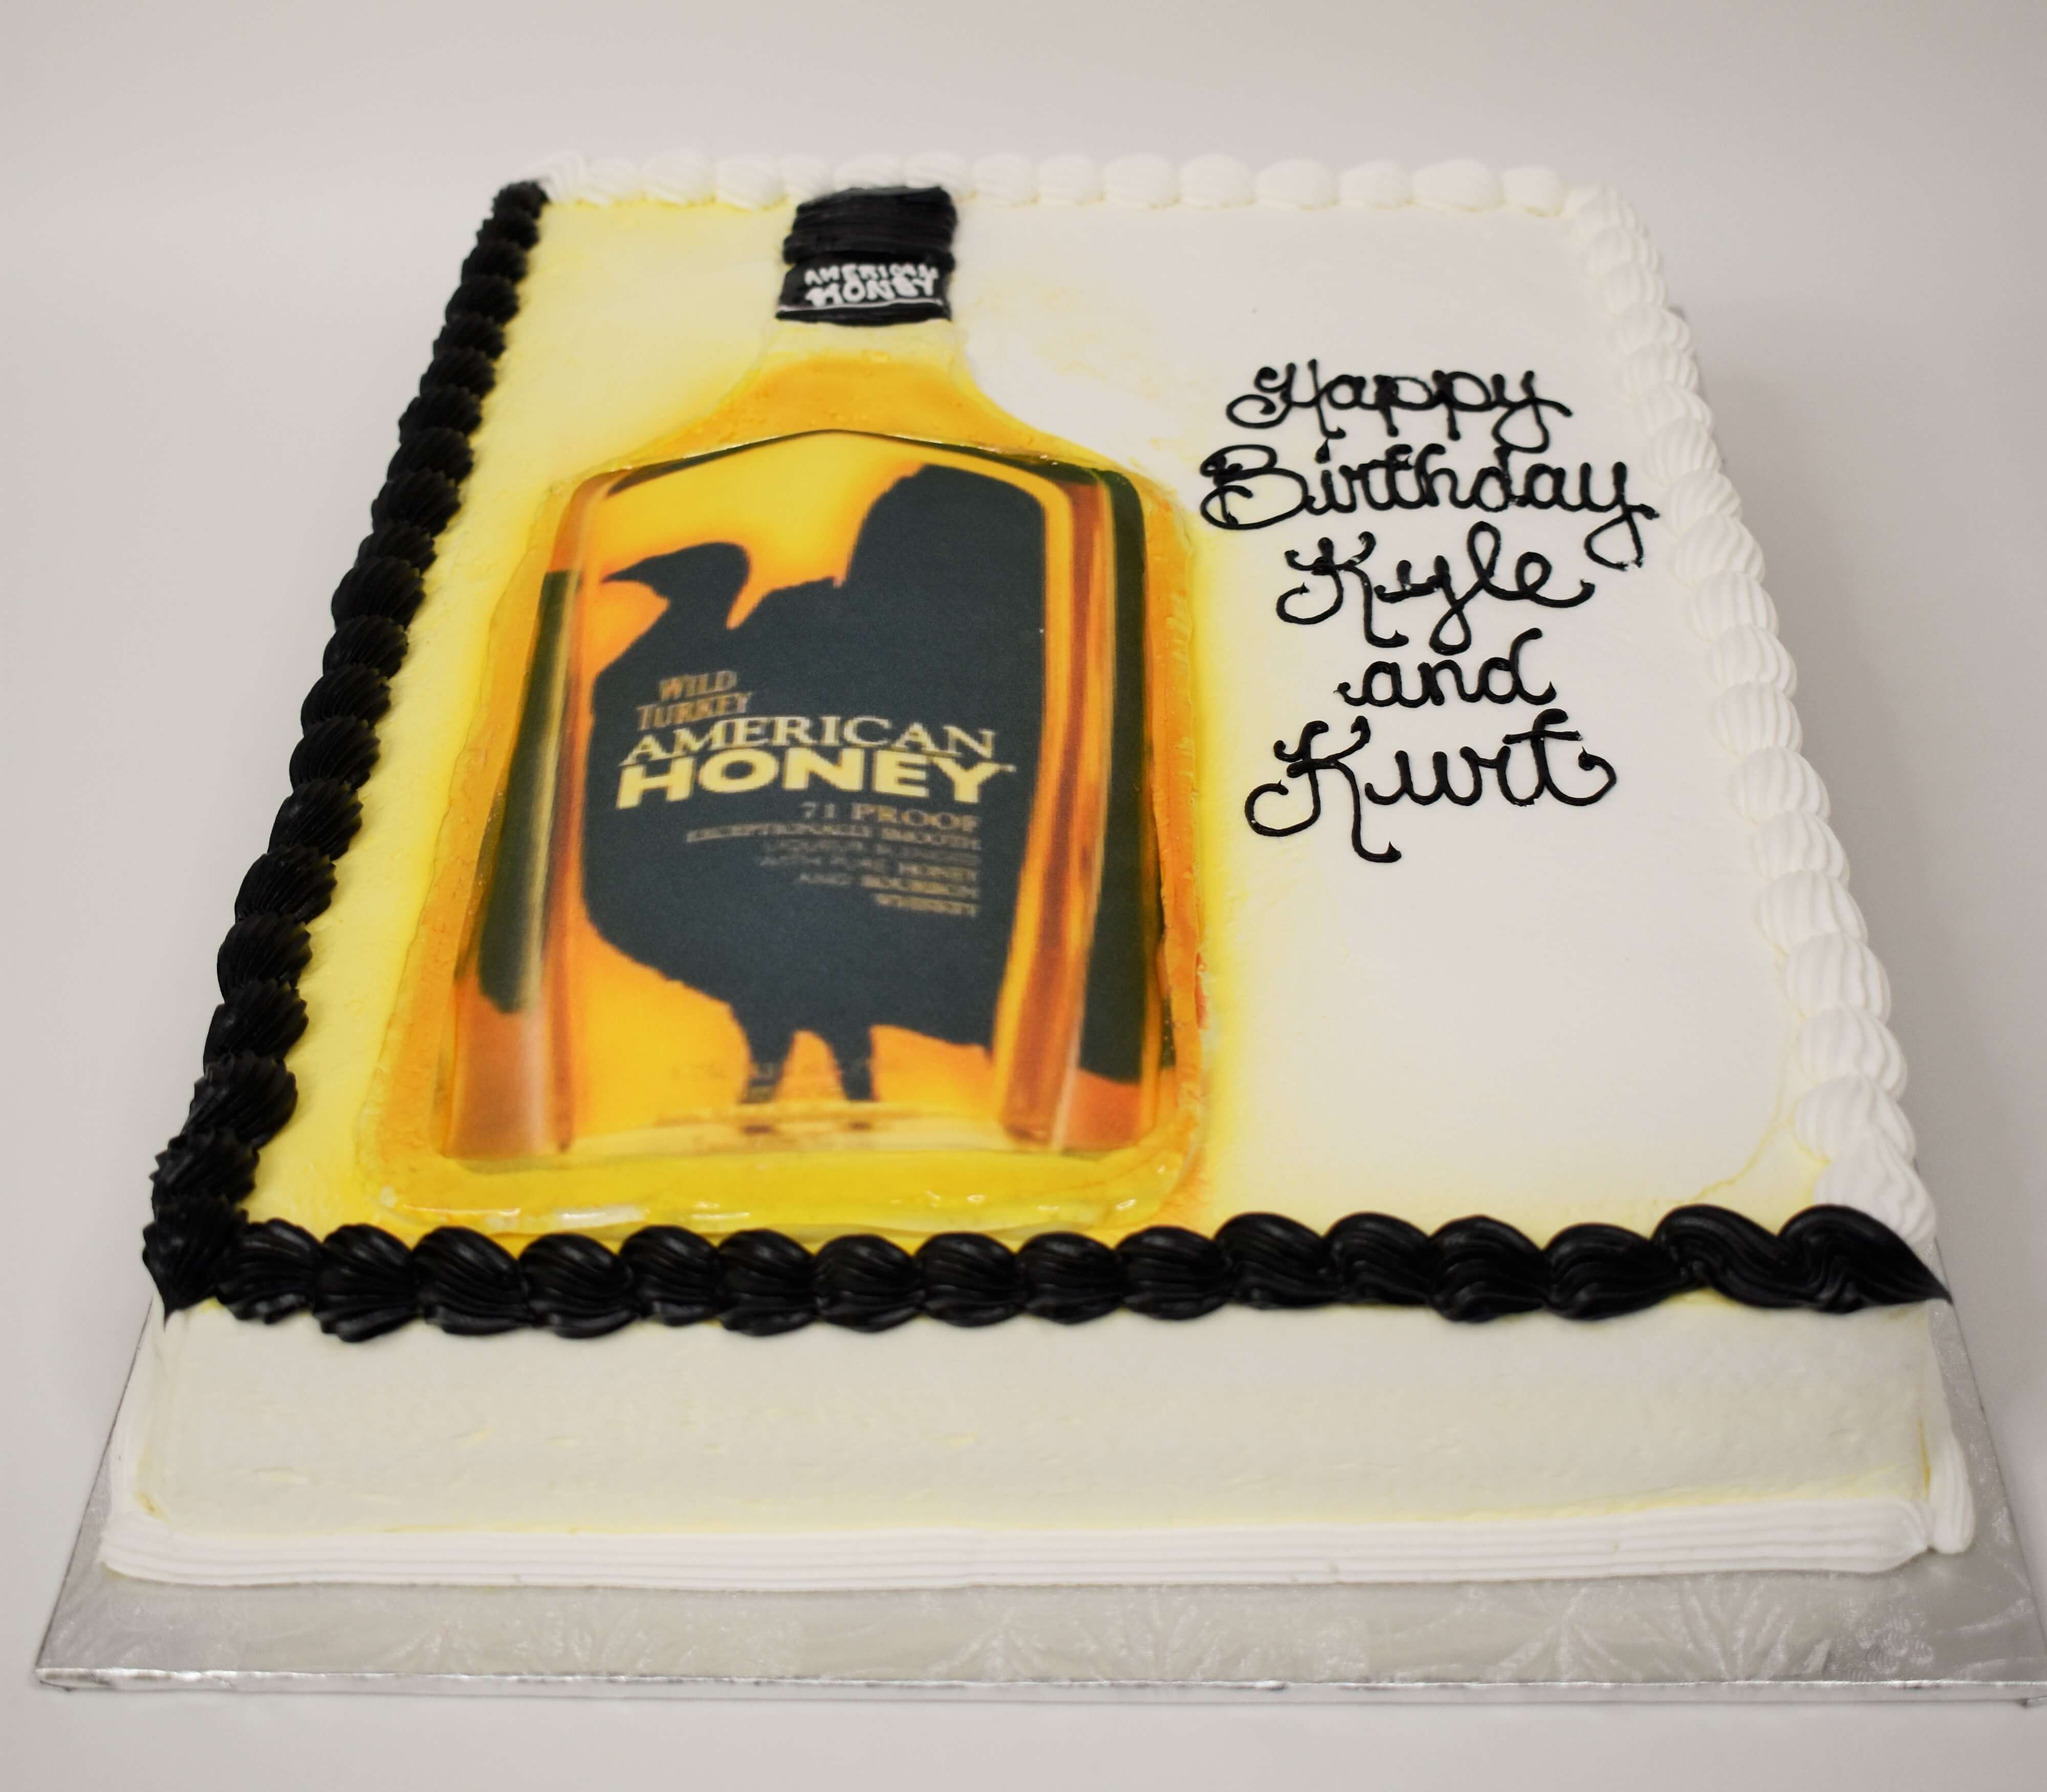 McArthur's Bakery Custom Cake with American Honey, Bottle, Yellow, Black.